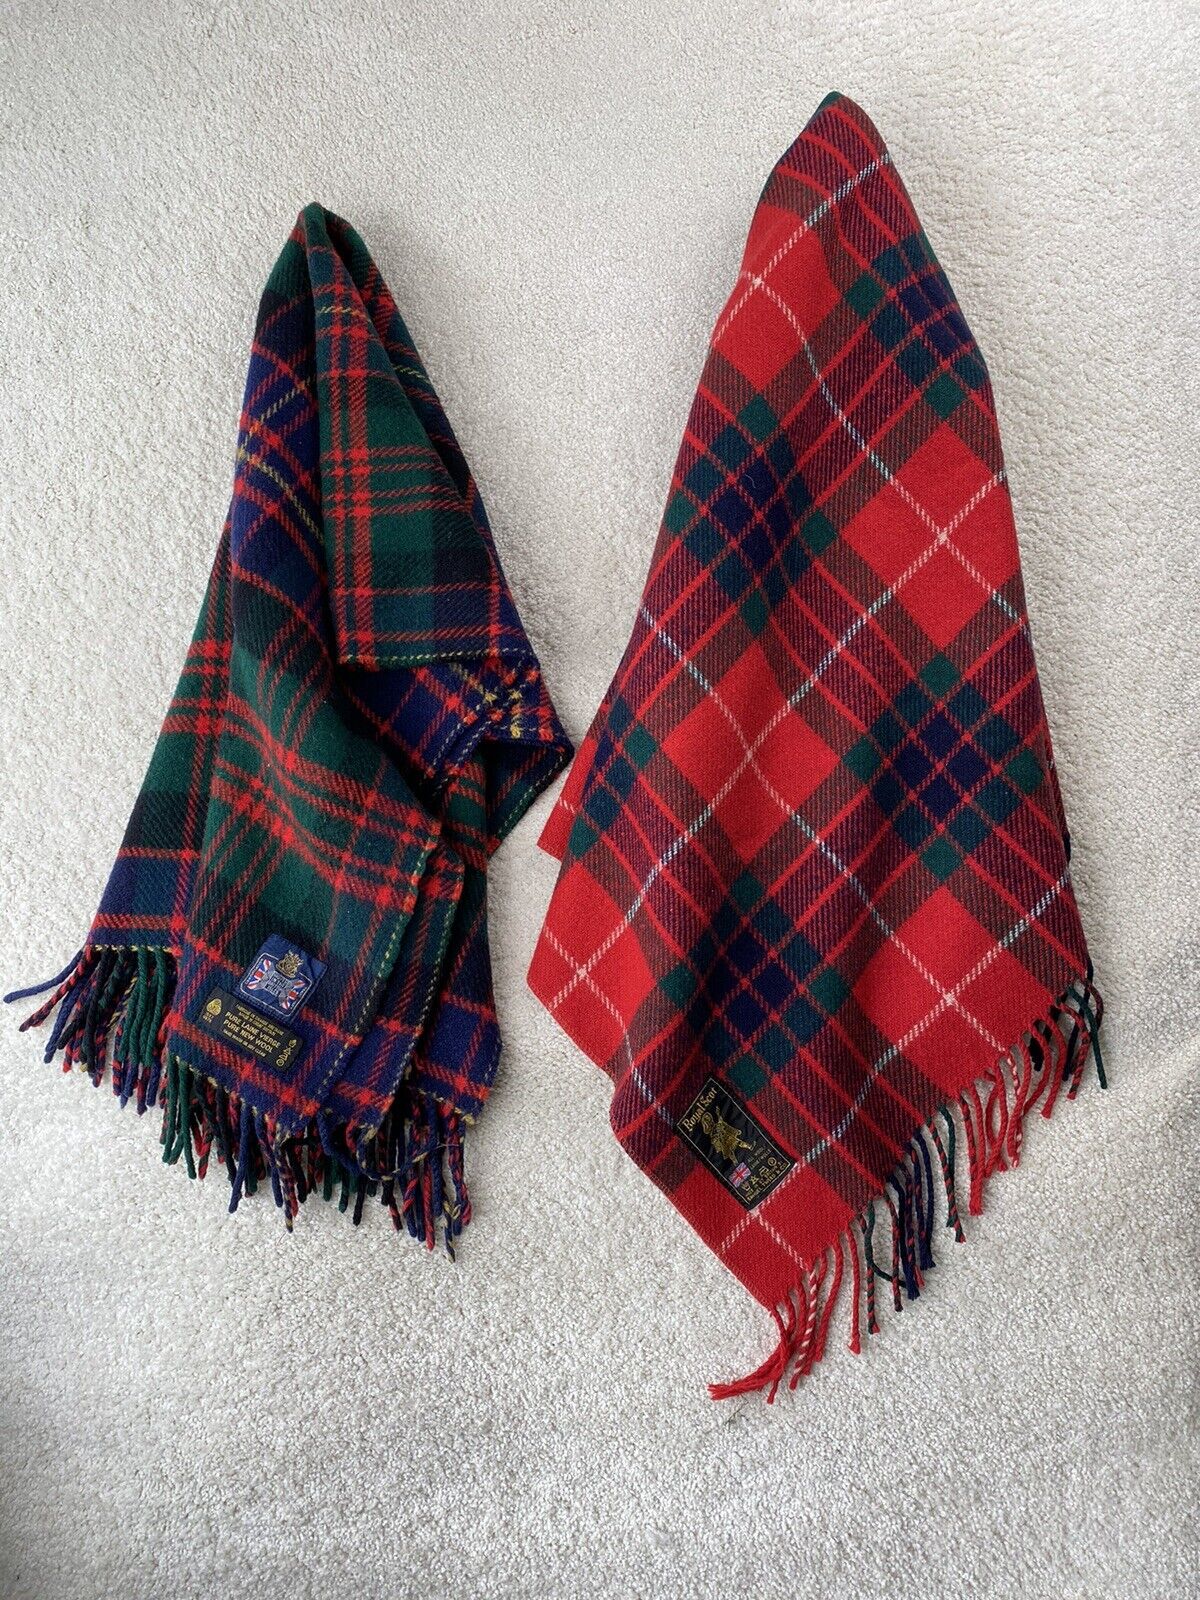 Vintage Royal Scot Plaid Throw Blankets Lot of 2 Red Blue Green Tartan Fringe